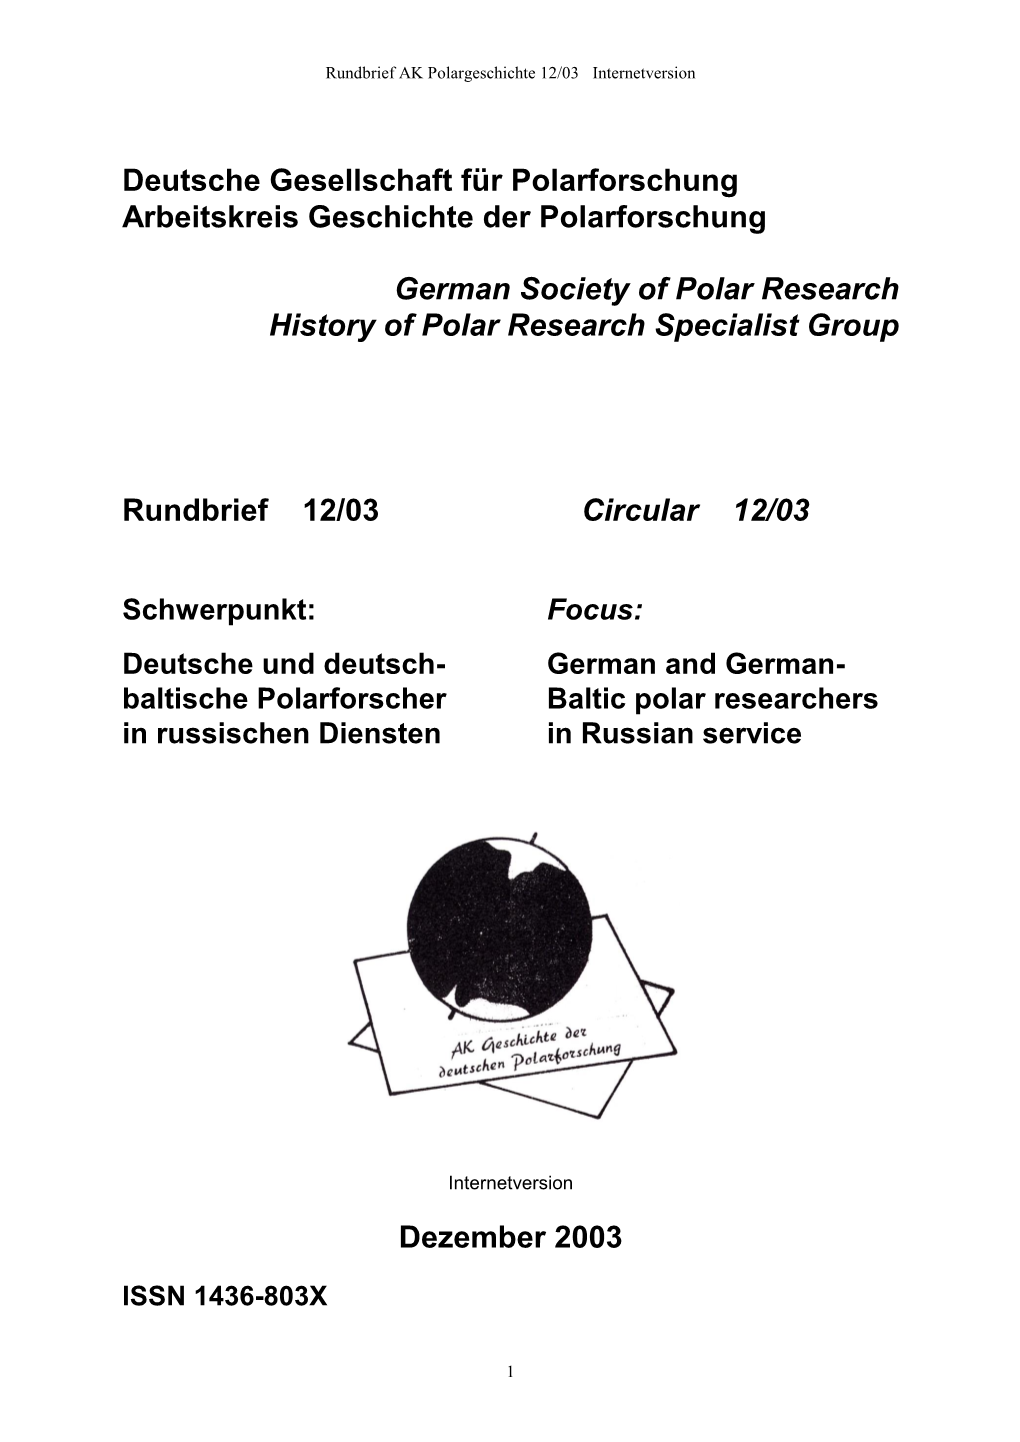 Arbeitskreis Geschichte Der Polarforschung